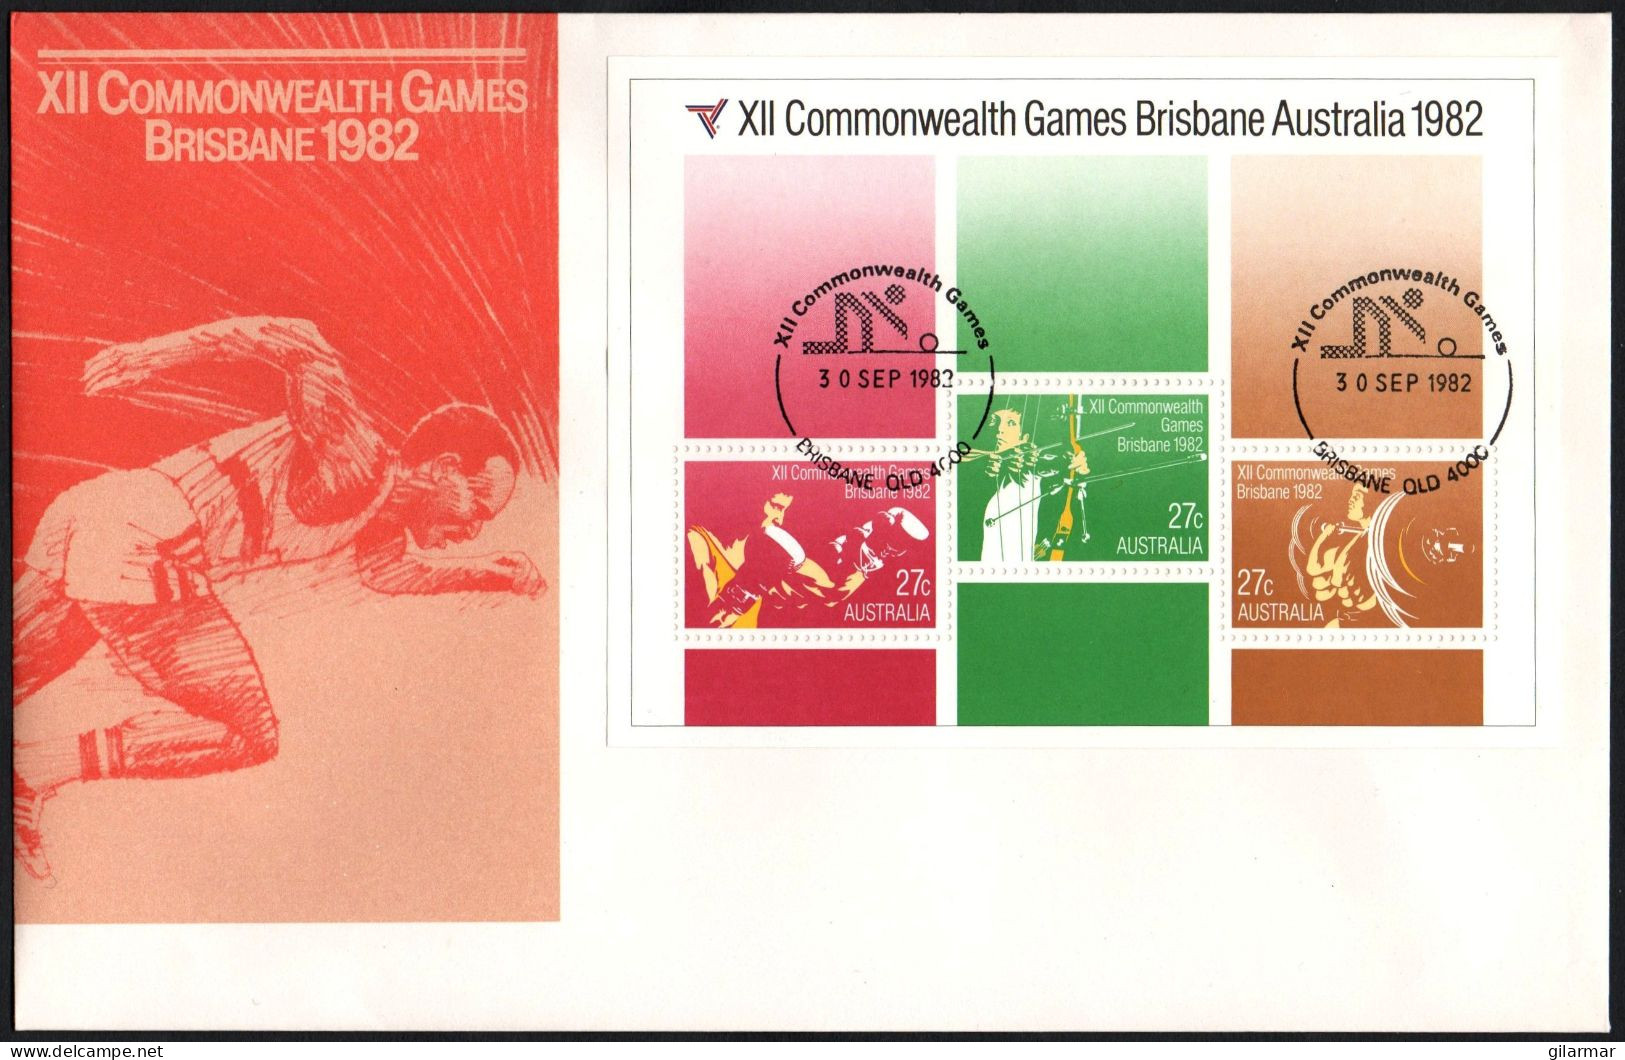 AUSTRALIA BRISBANE 1982 - XII COMMONWEALTH GAMES - SHEET - BOWLS POSTMARK - G - Boule/Pétanque